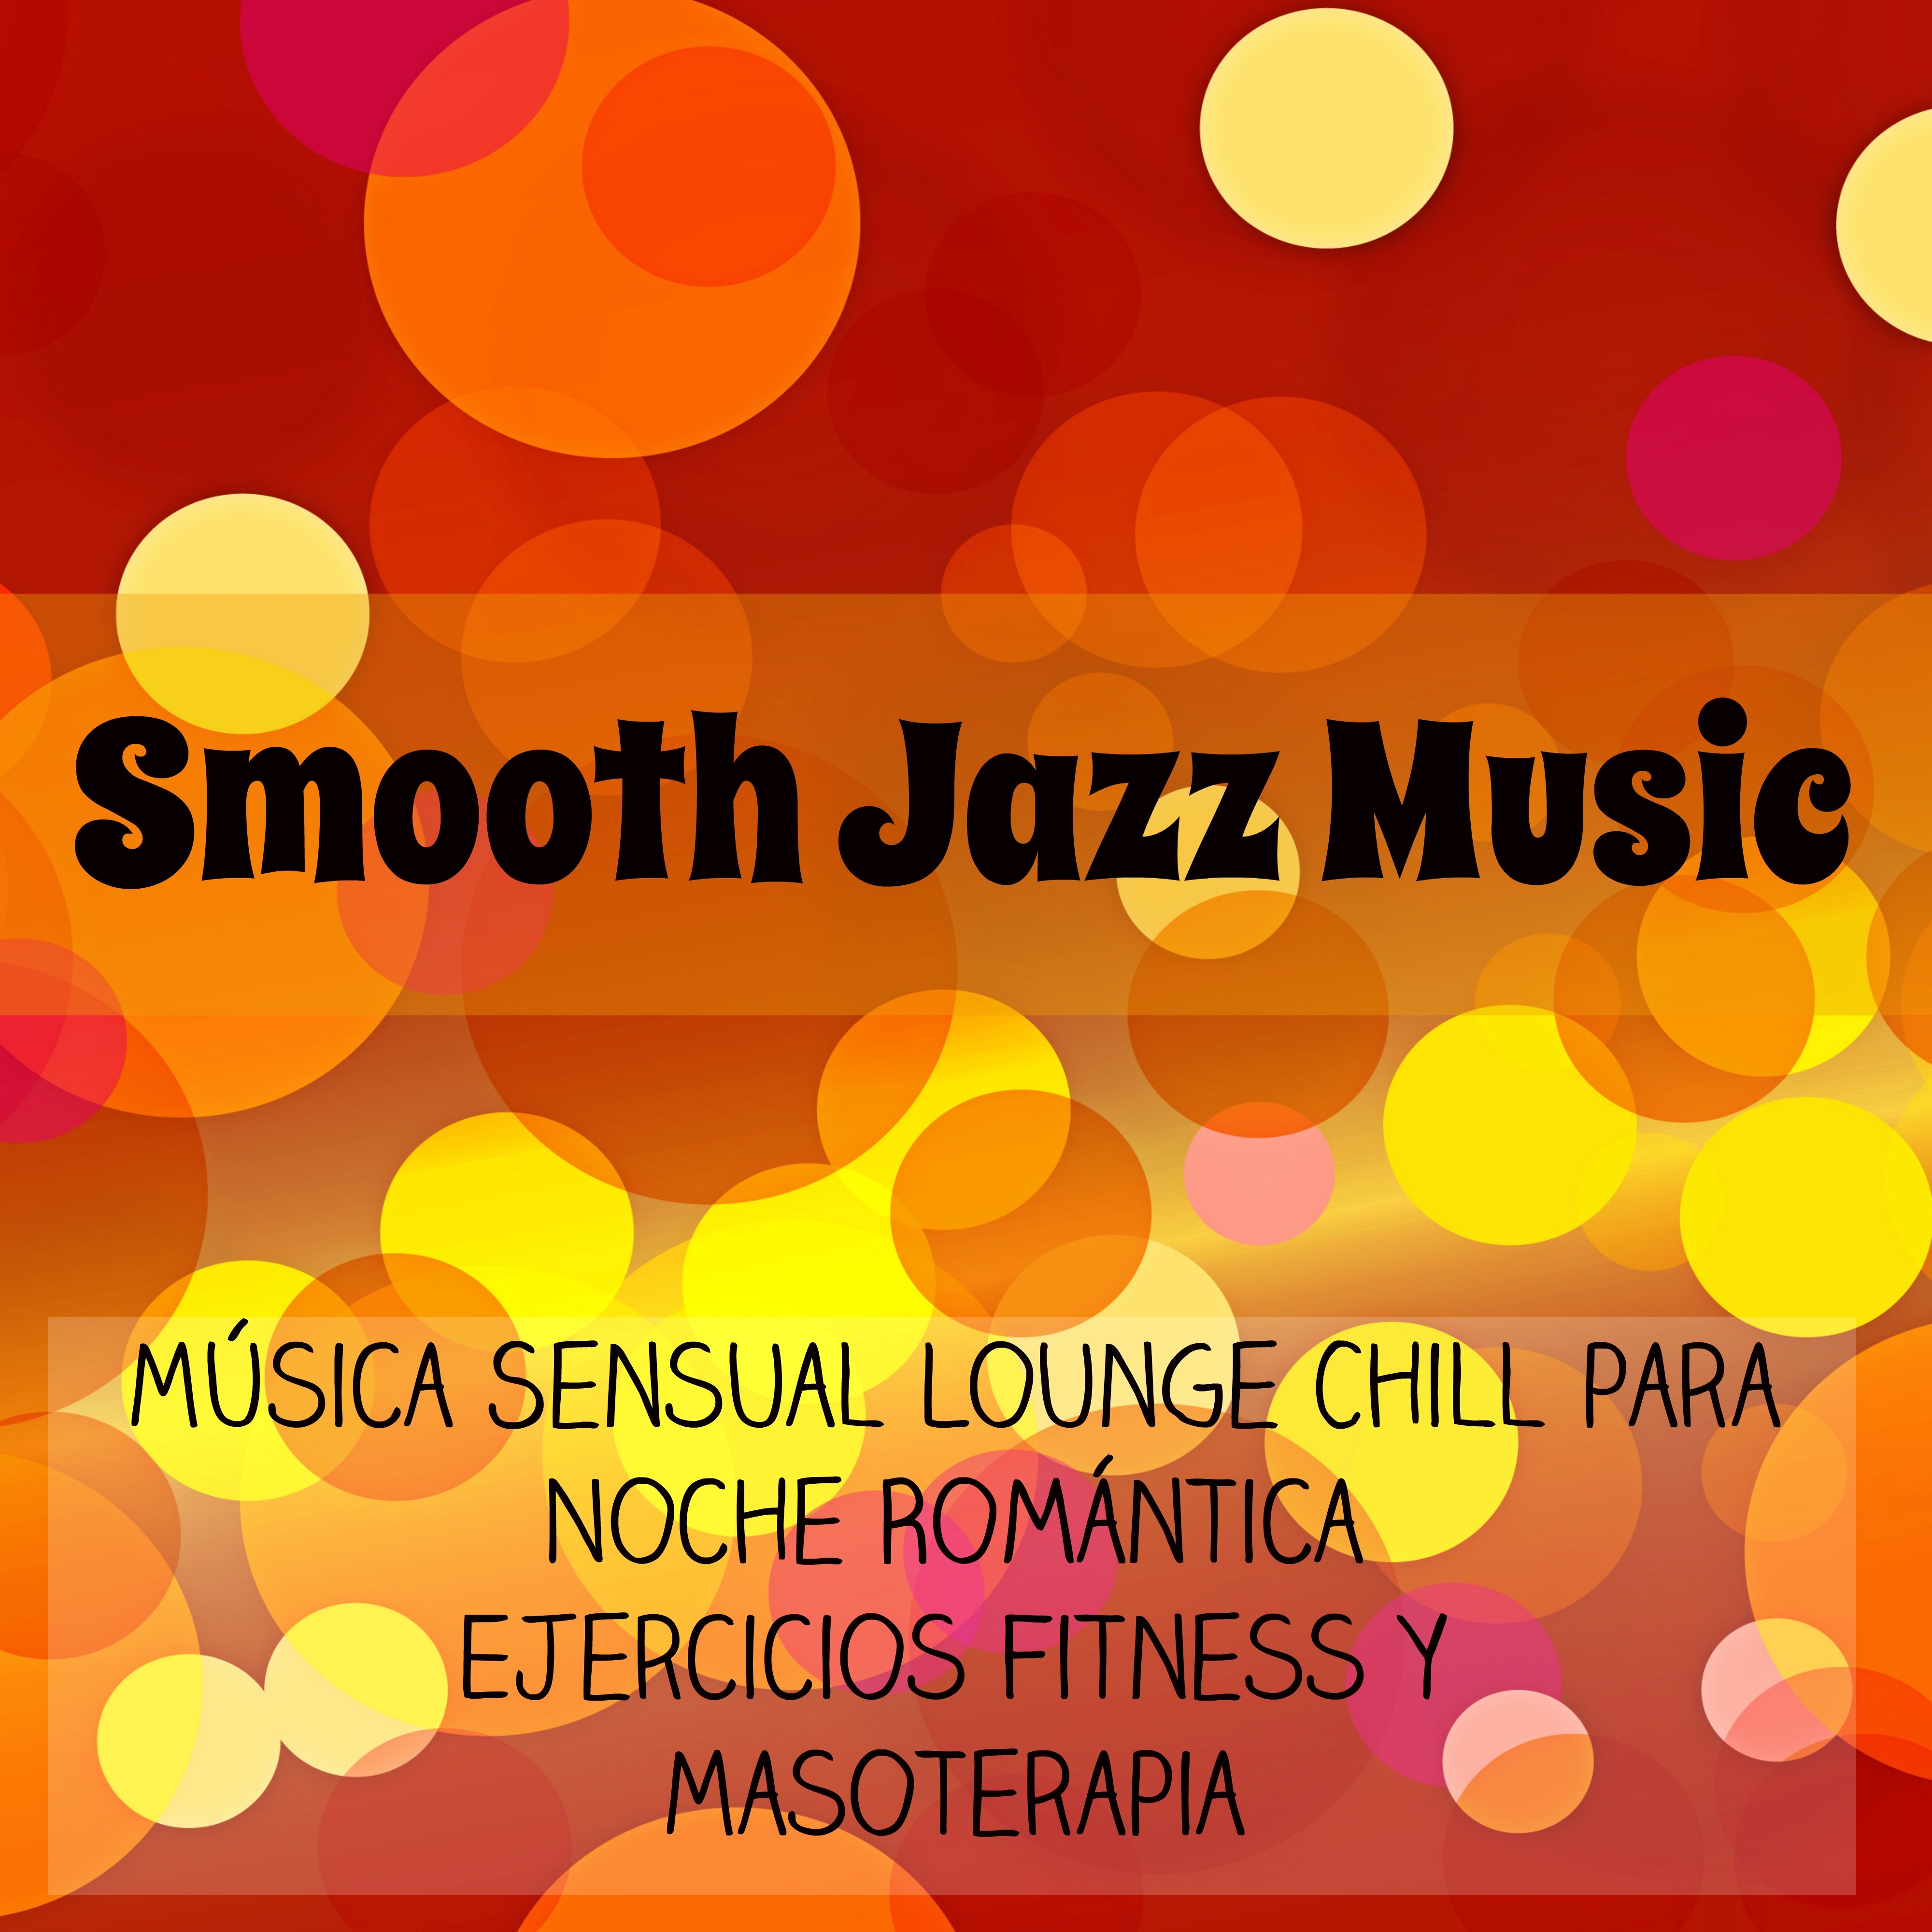 Smooth Jazz Music  Mu sica Sensual Lounge Chillout para Noche Roma ntica Ejercicios Fitness y Masoterapia